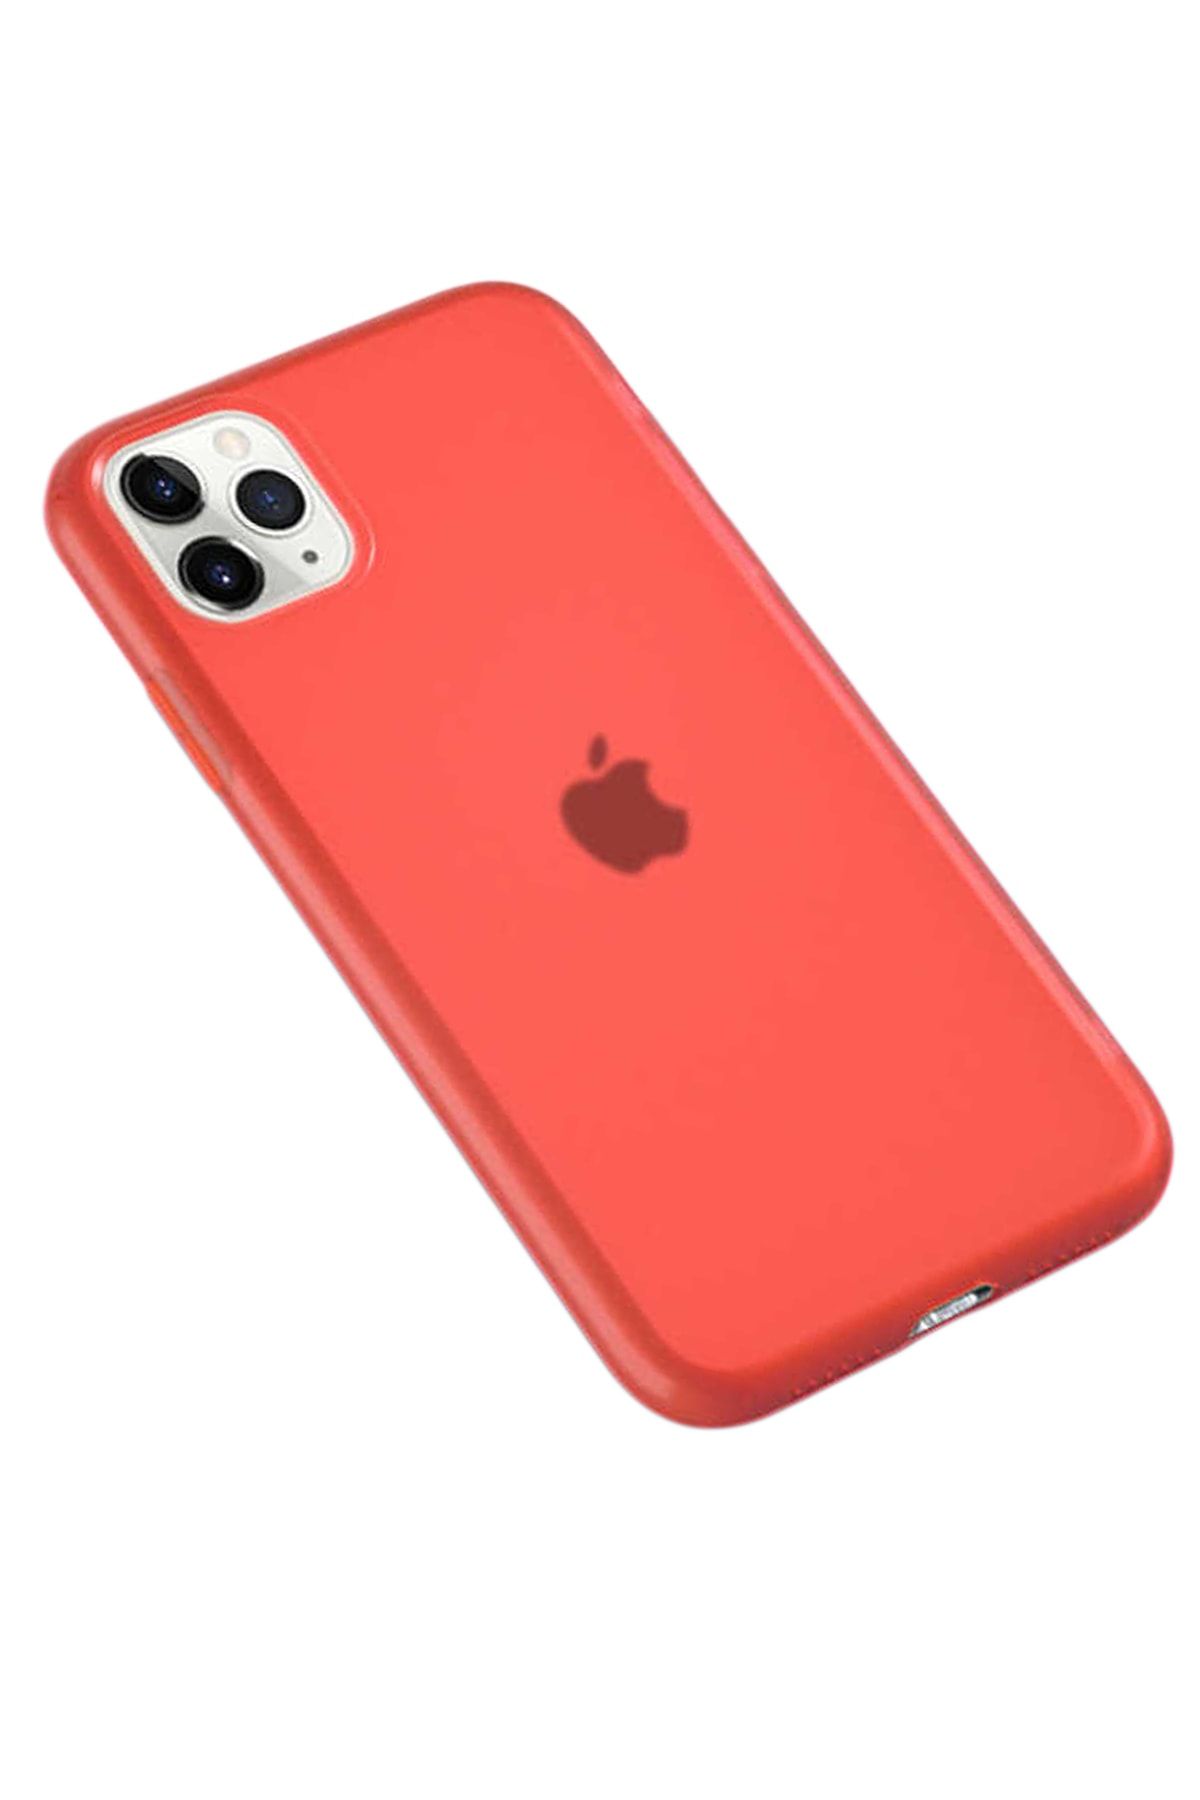 Elfia Iphone 11 Pro Kılıf Şeffaf Renkli Silikon Koruma